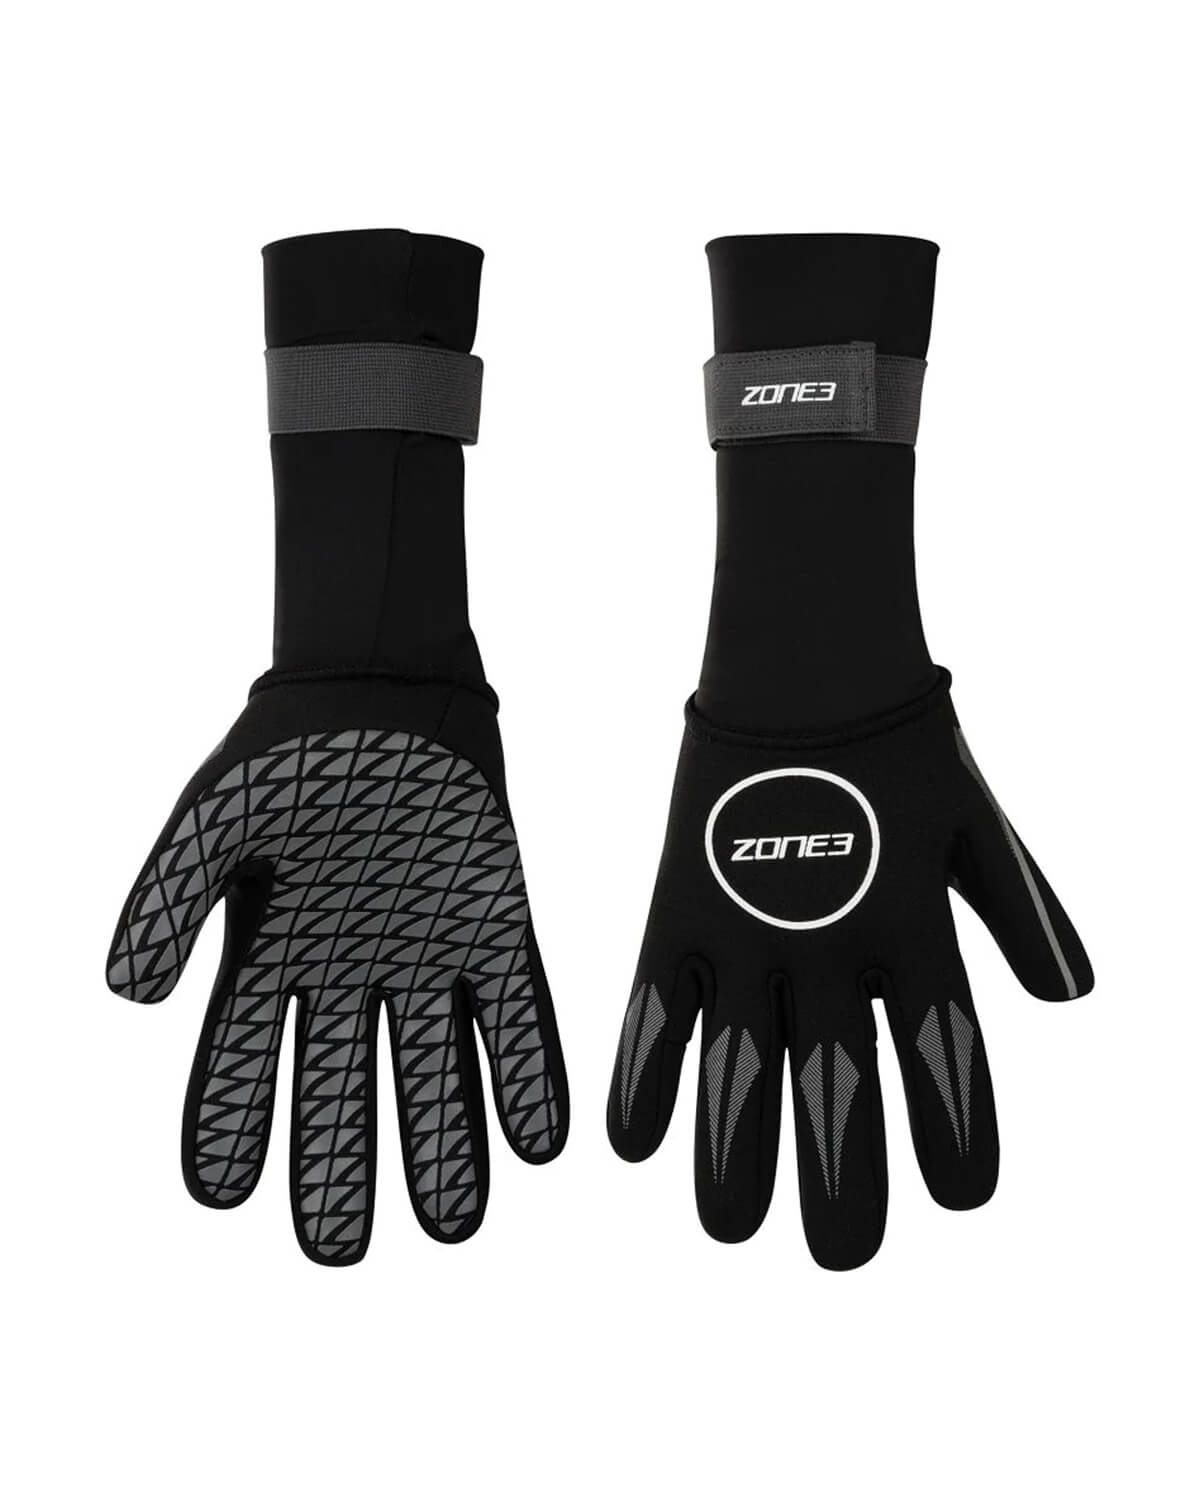 2mm Zone3 Neoprene Swim Gloves